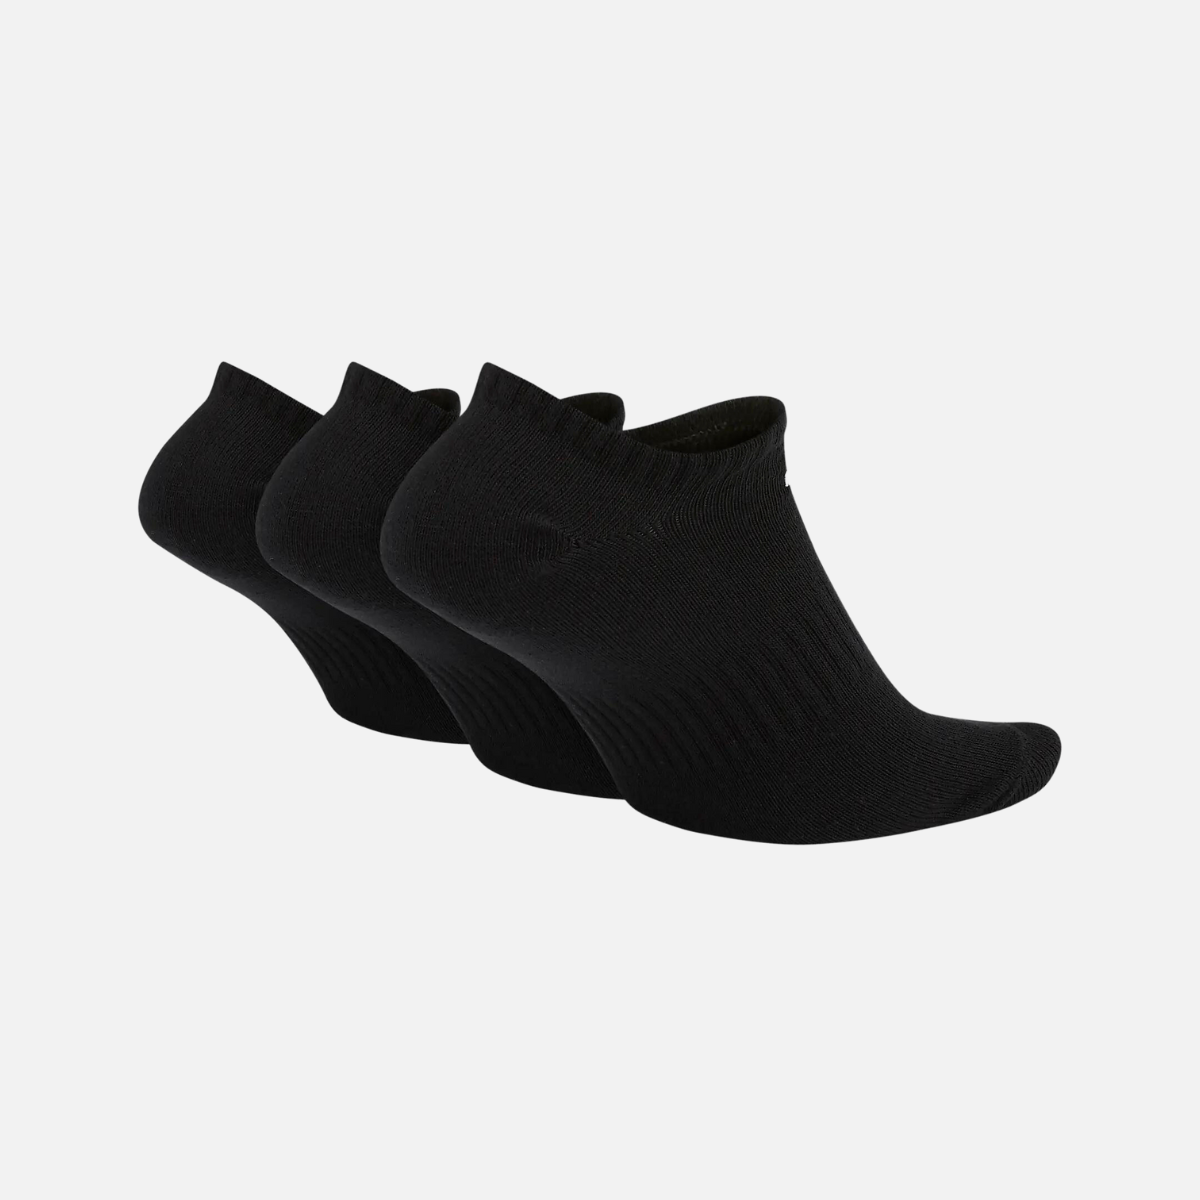 Nike Everyday Lightweight Training No-Show Socks (3 Pairs) -Black/White